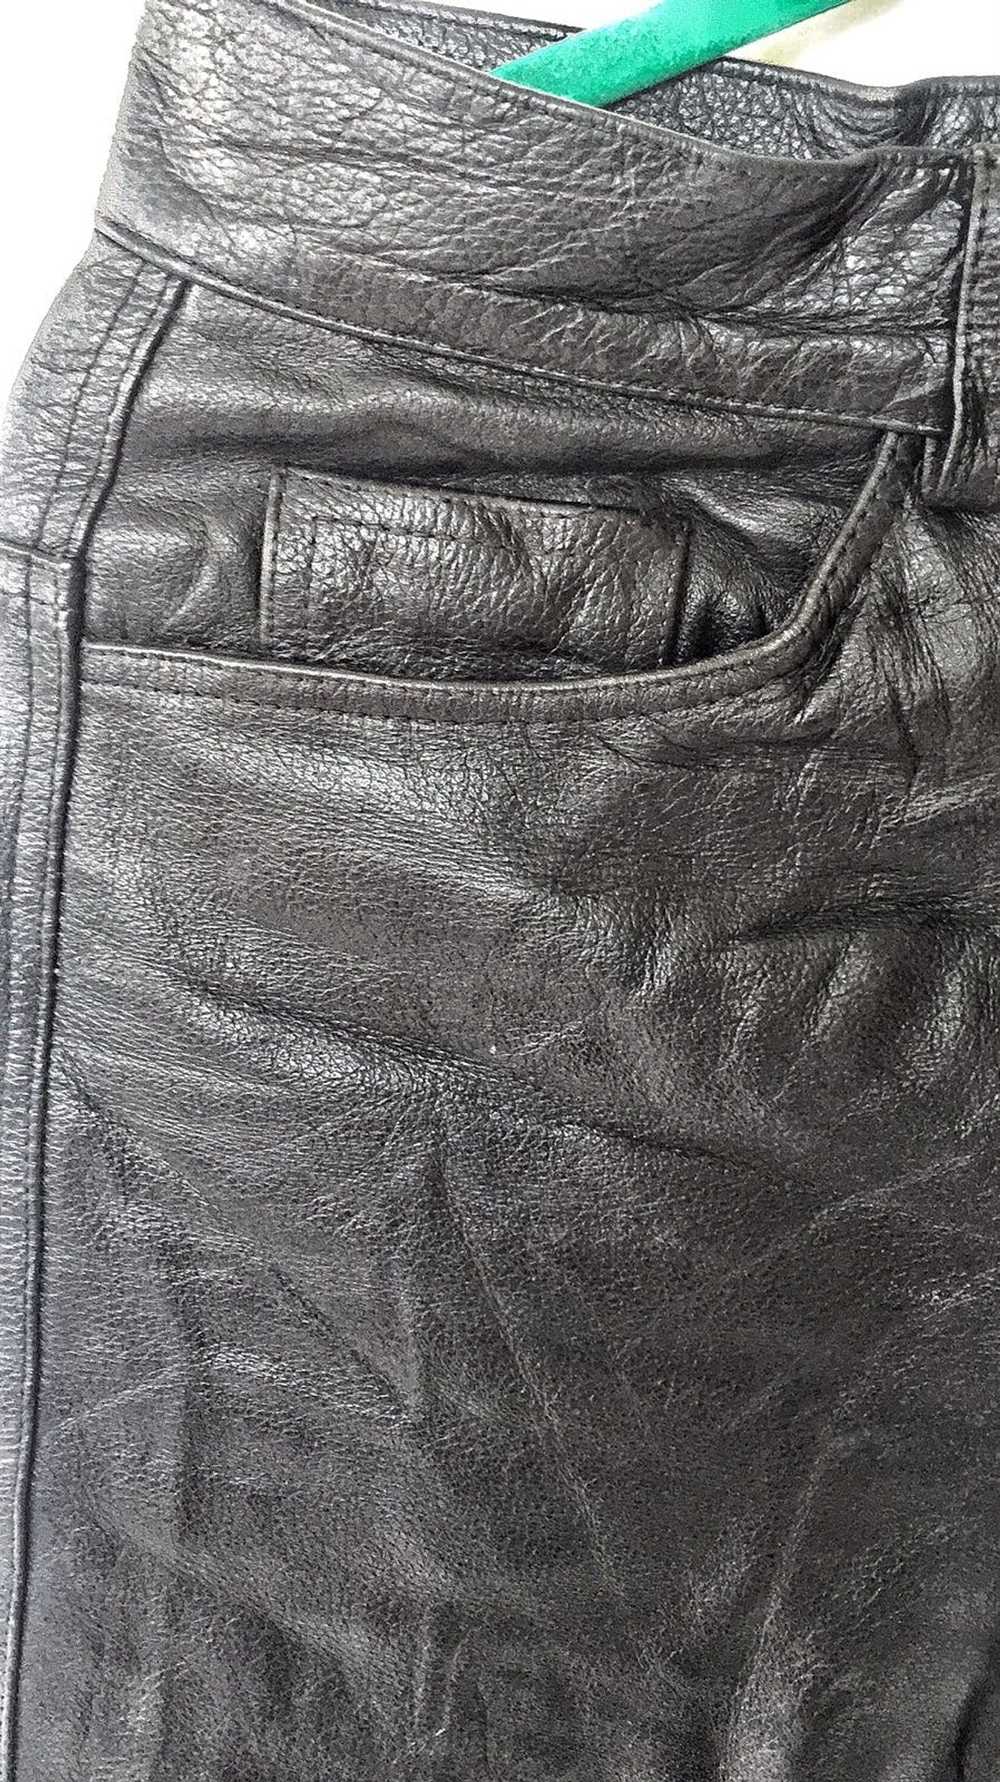 Genuine Leather Genuine Leather jeans - image 5